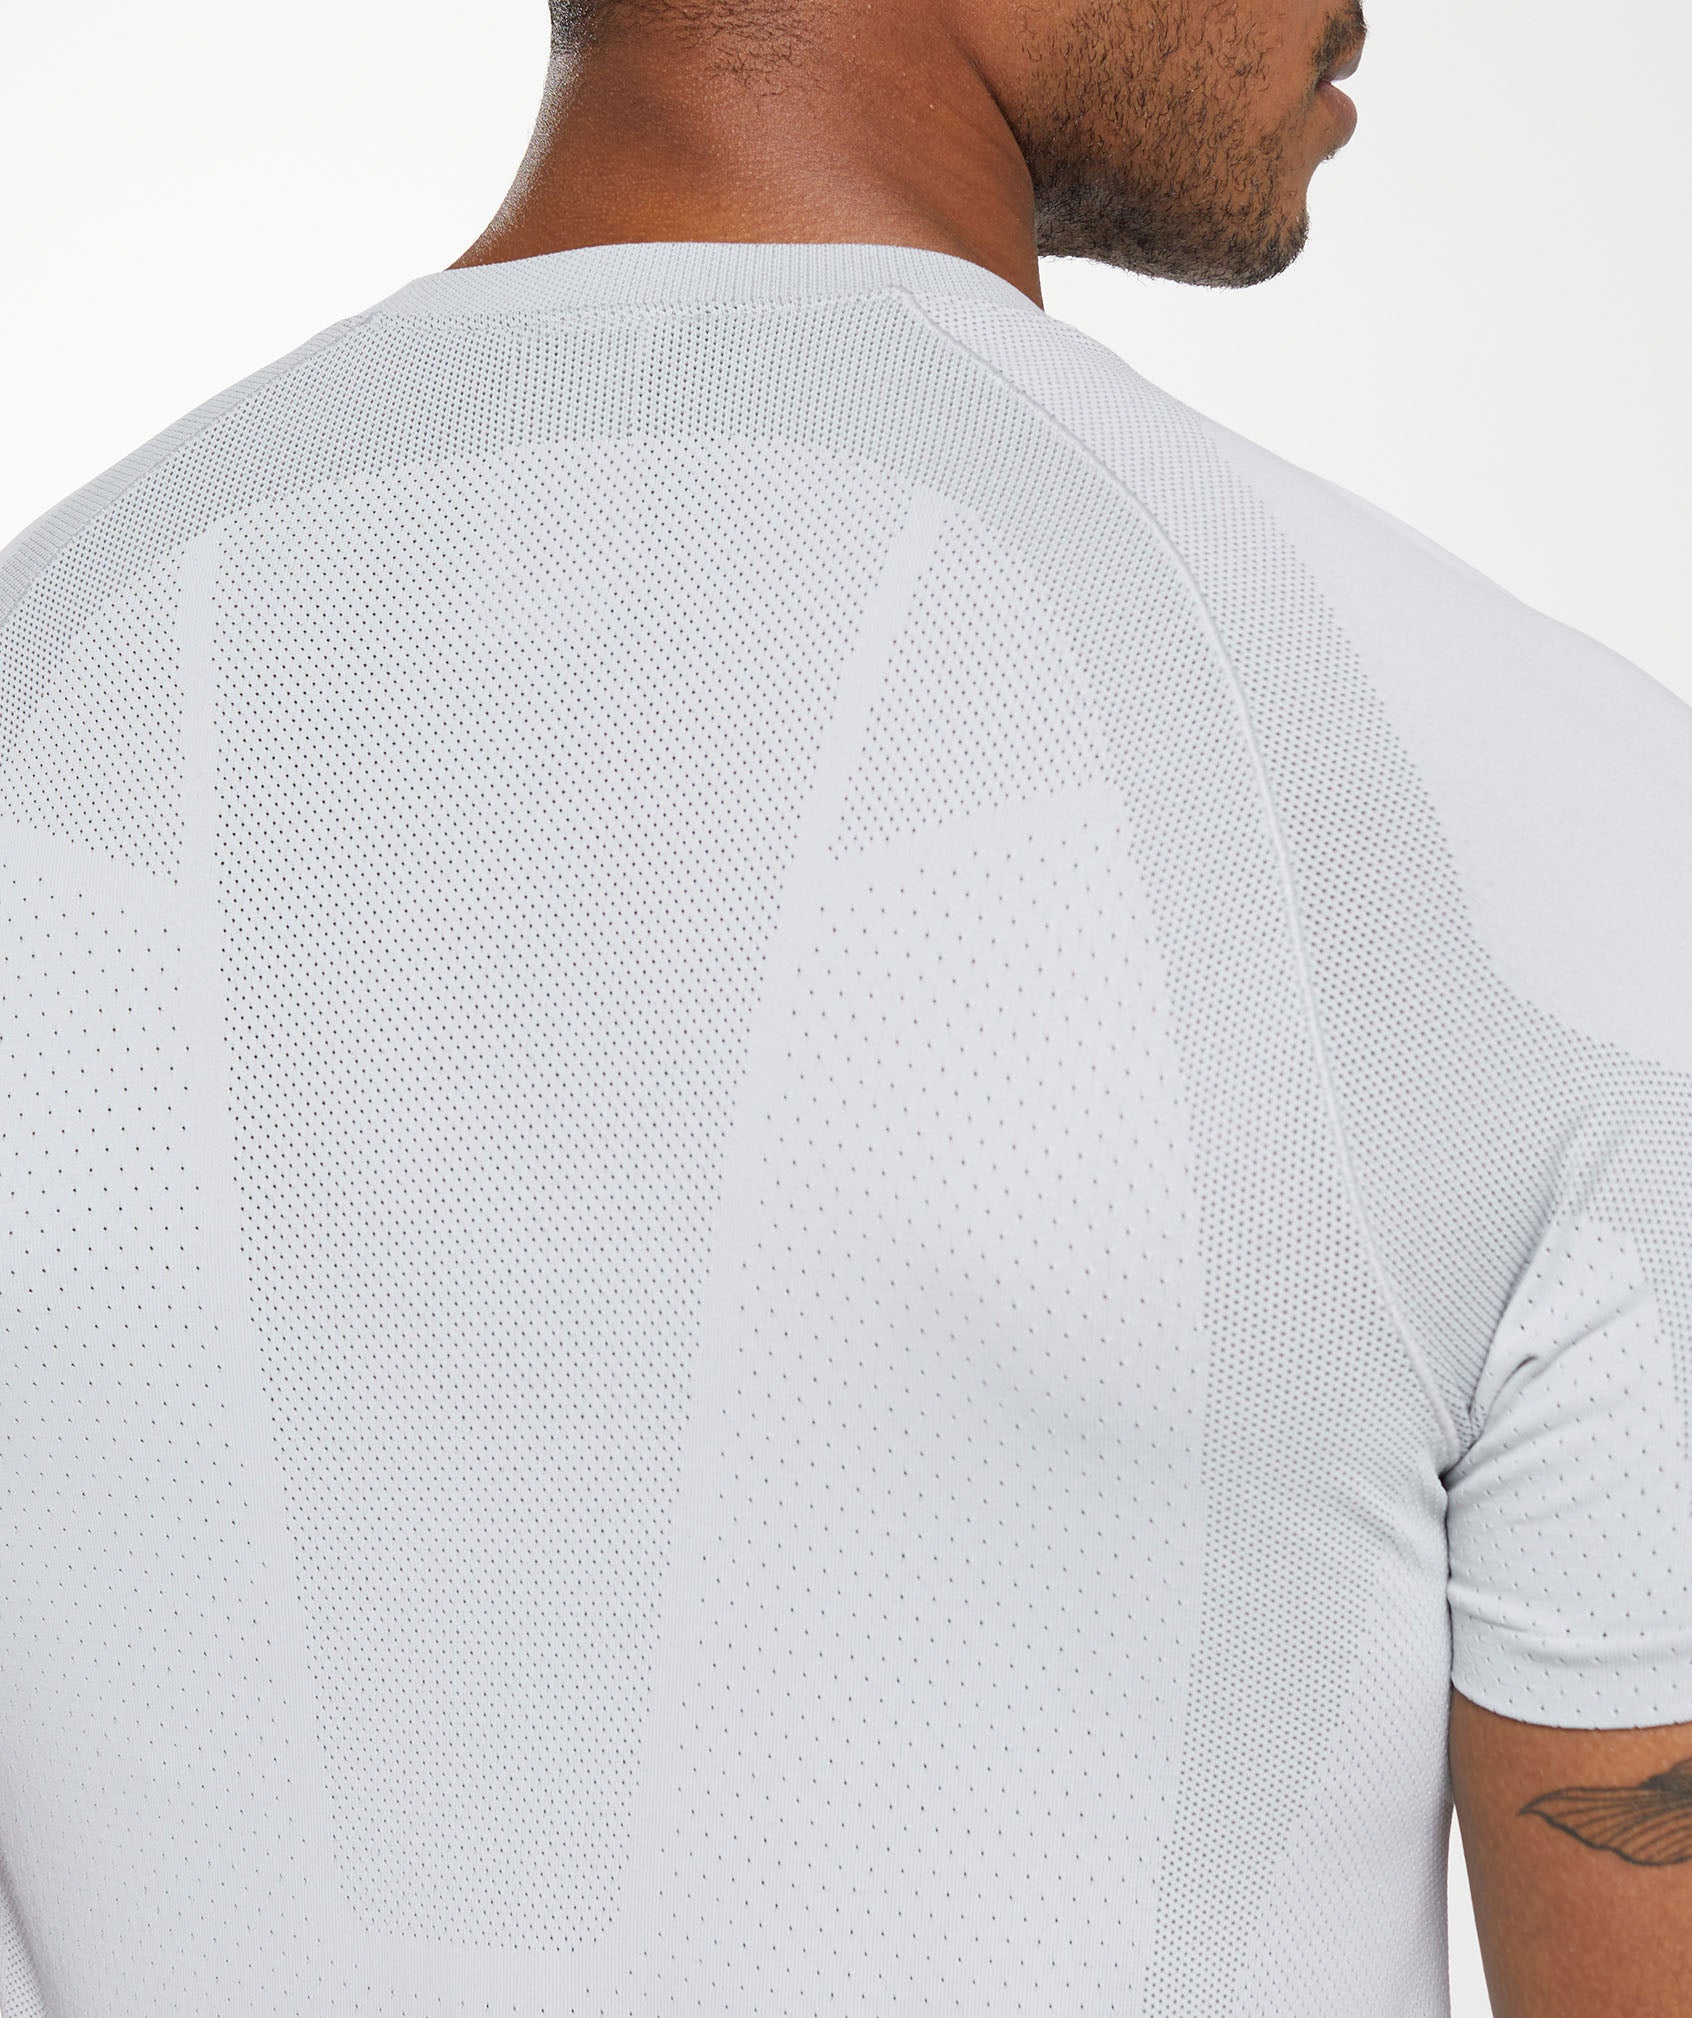 Apex Seamless T-Shirt in Light Grey/Medium Grey - view 6